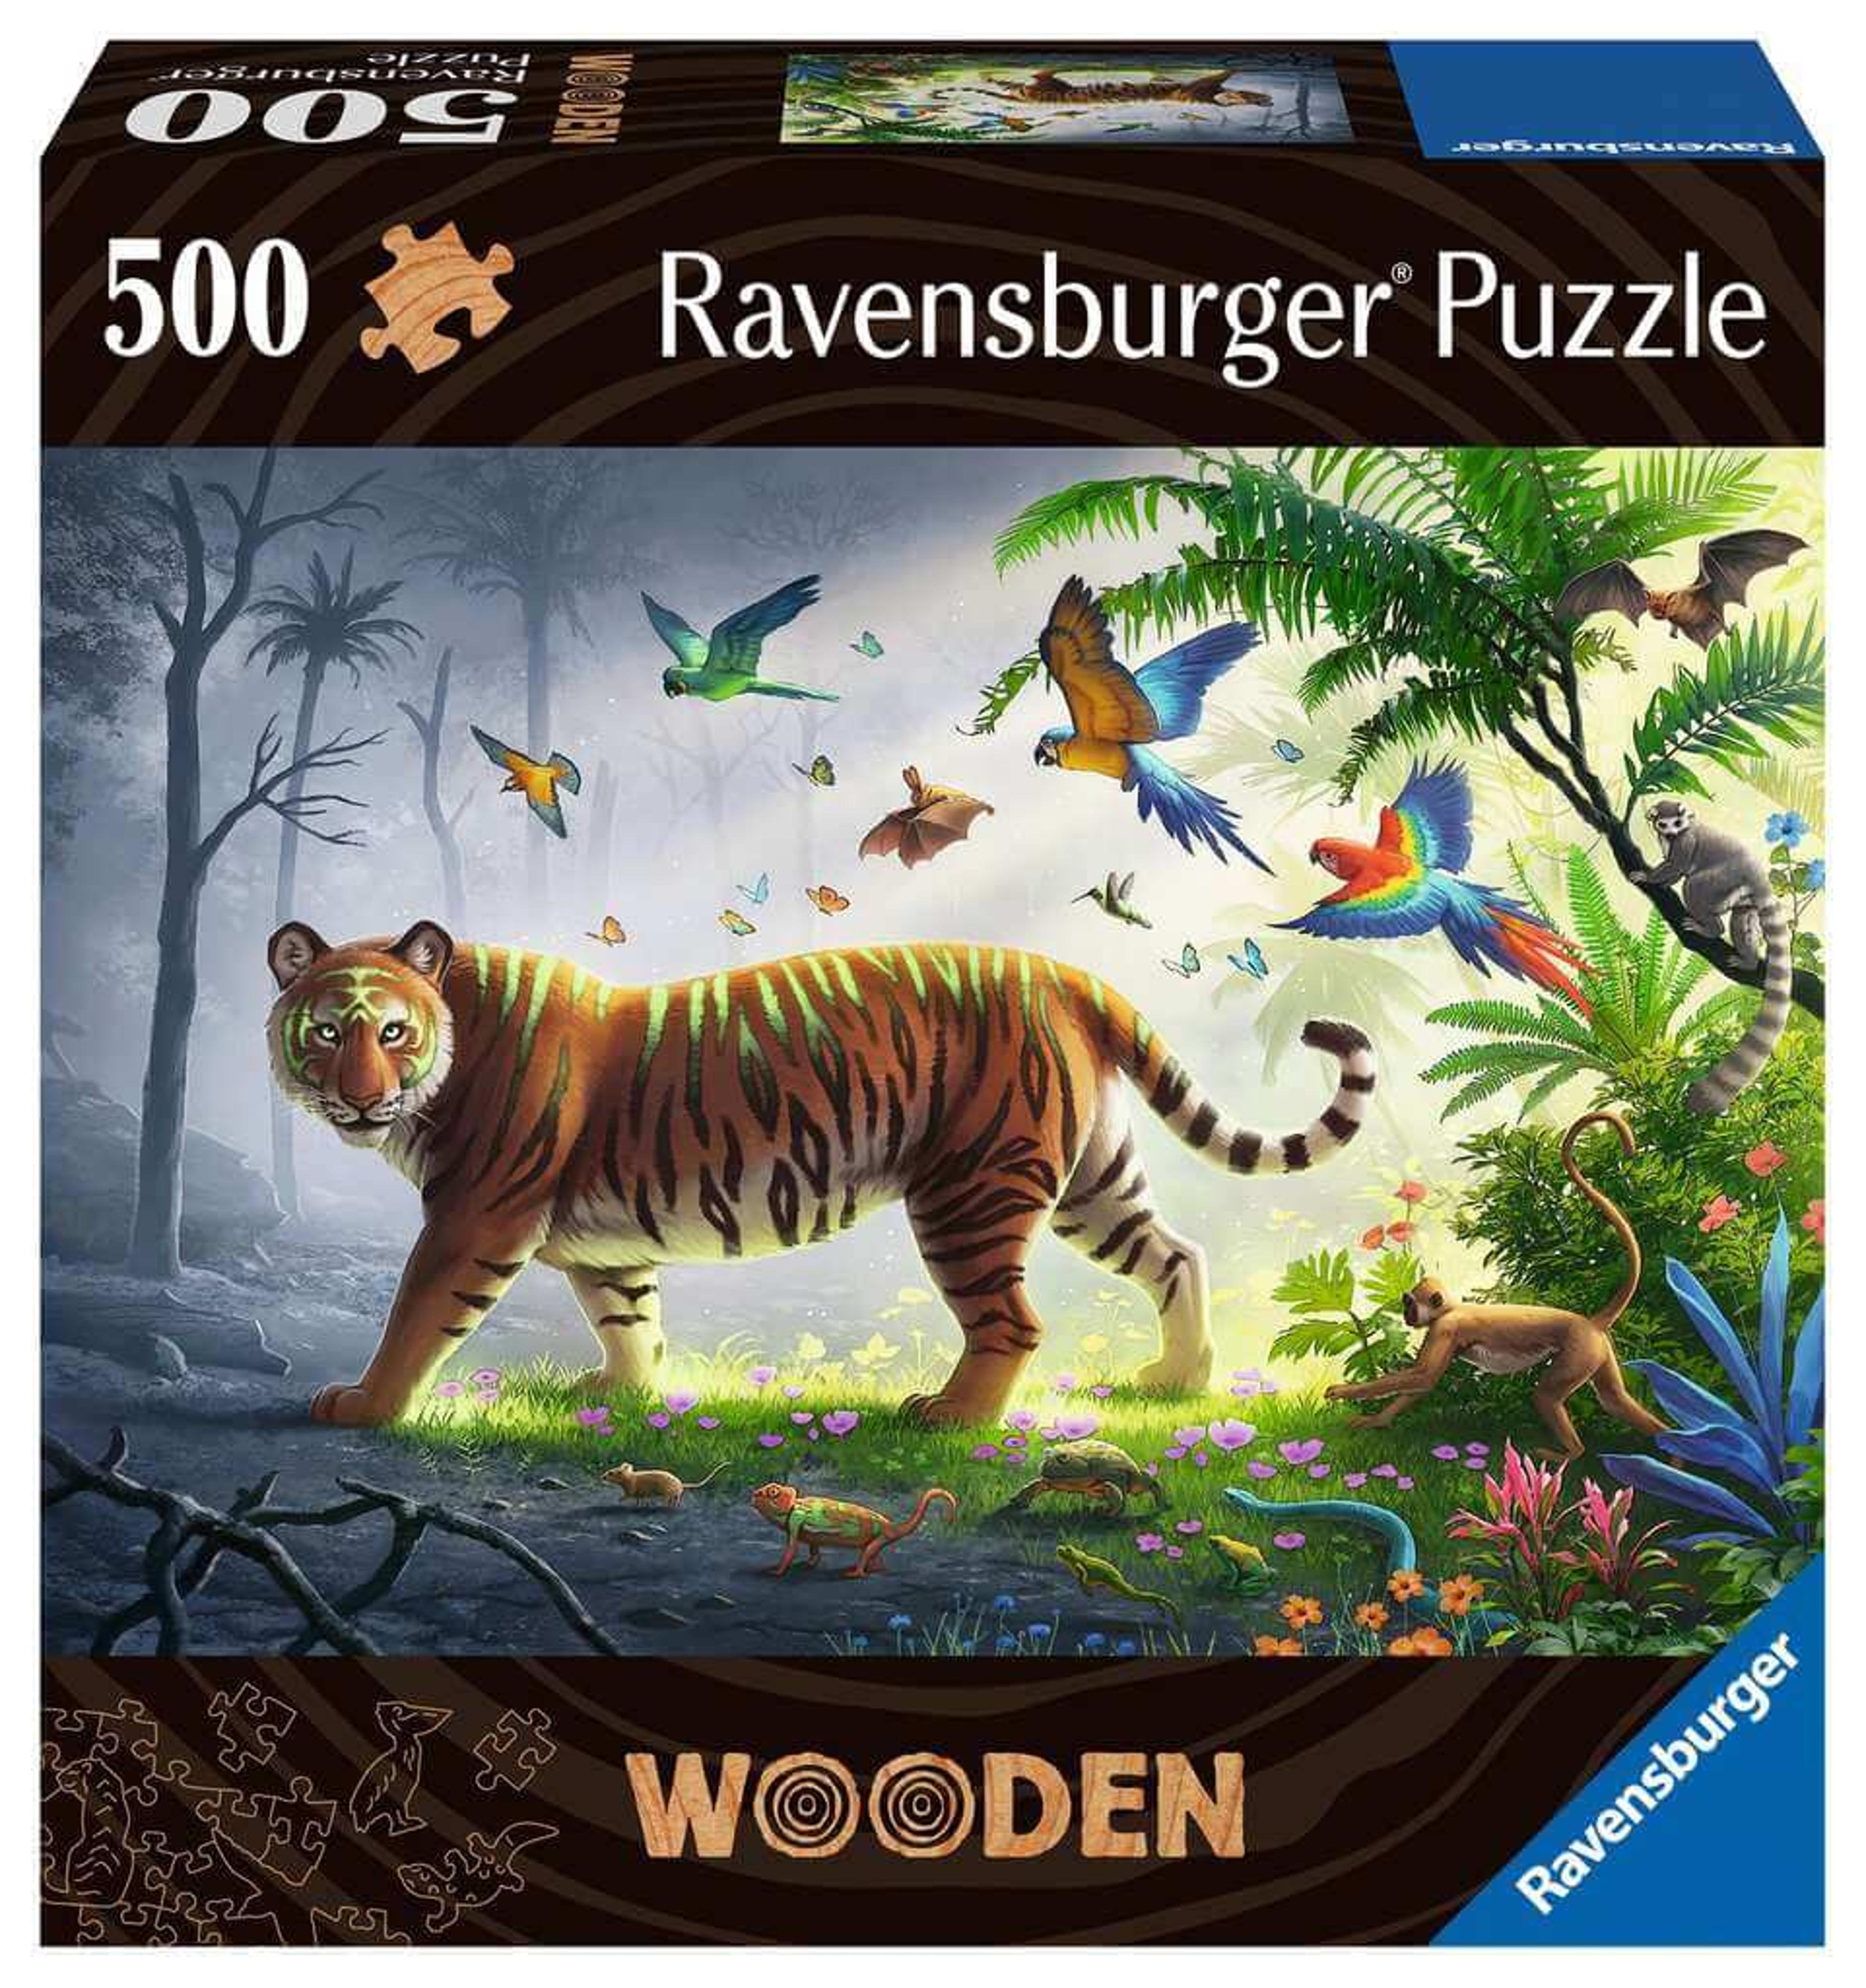 Ravensburger Jungle Tiger 500pc Wooden Puzzle